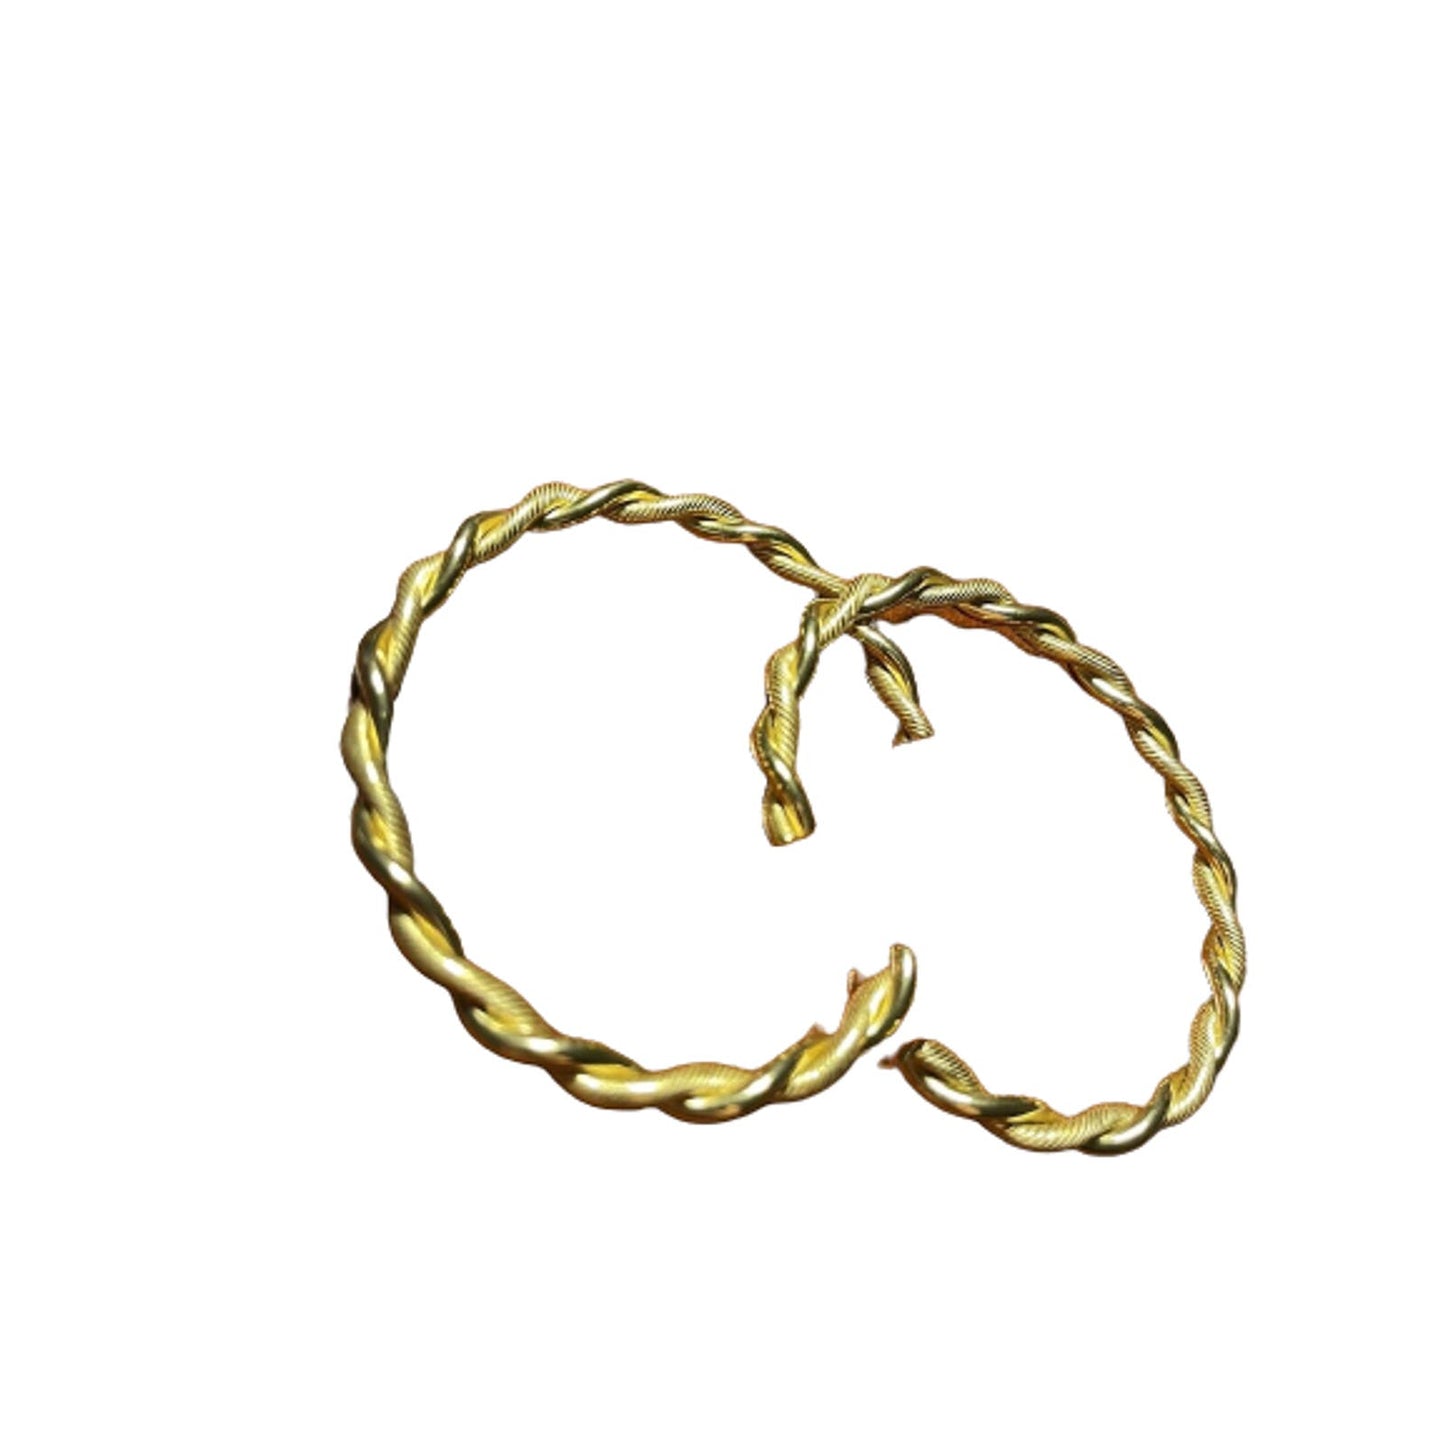 Women's Gold Rope-Design Cuff Bracelets (Set of 2)